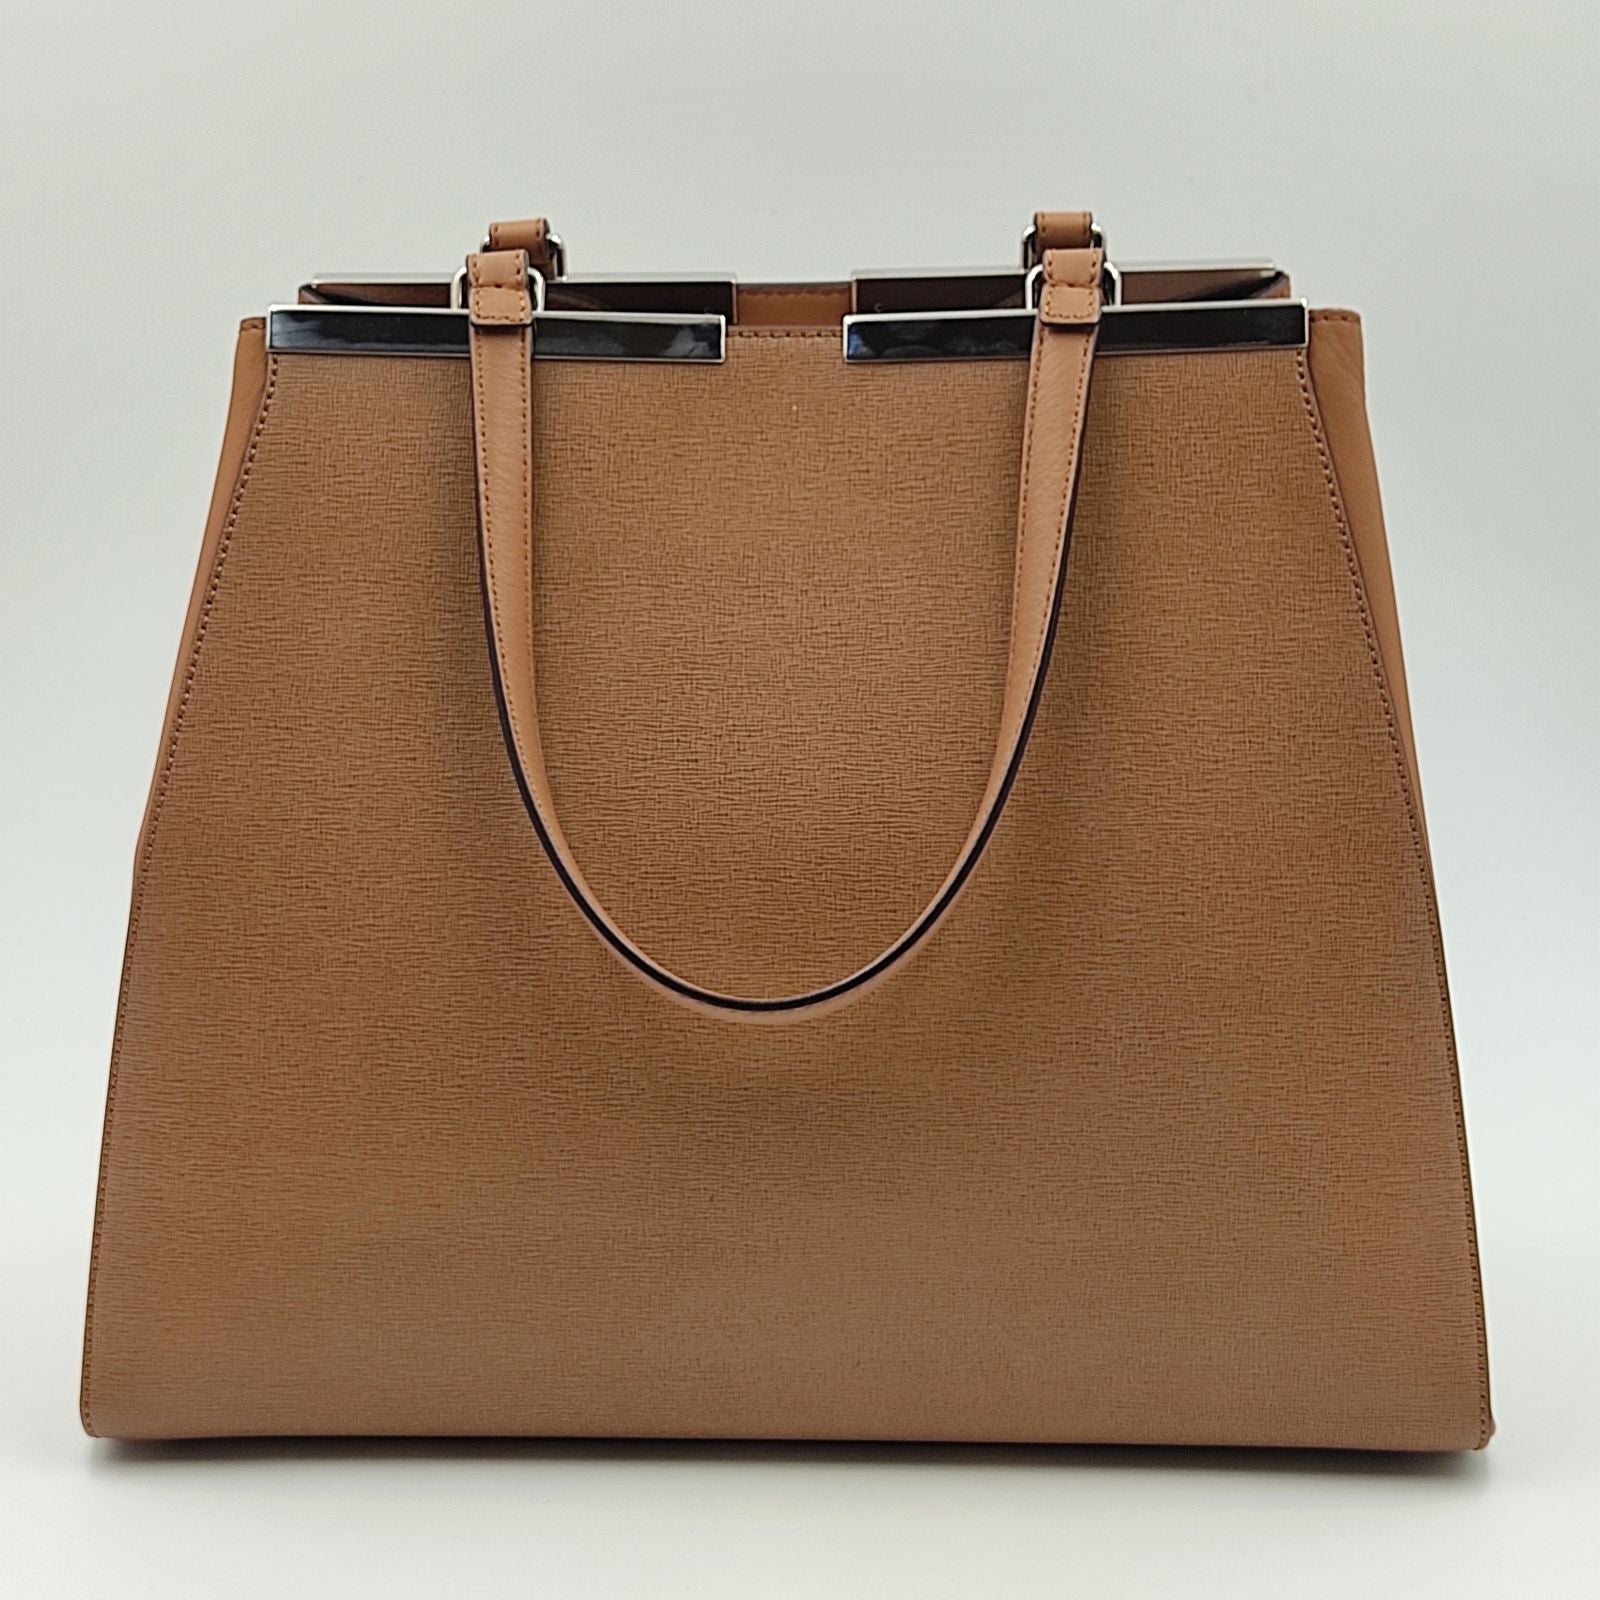 Fendi Fendi 3 Jours shoulder bag in leather and palladium - '10s